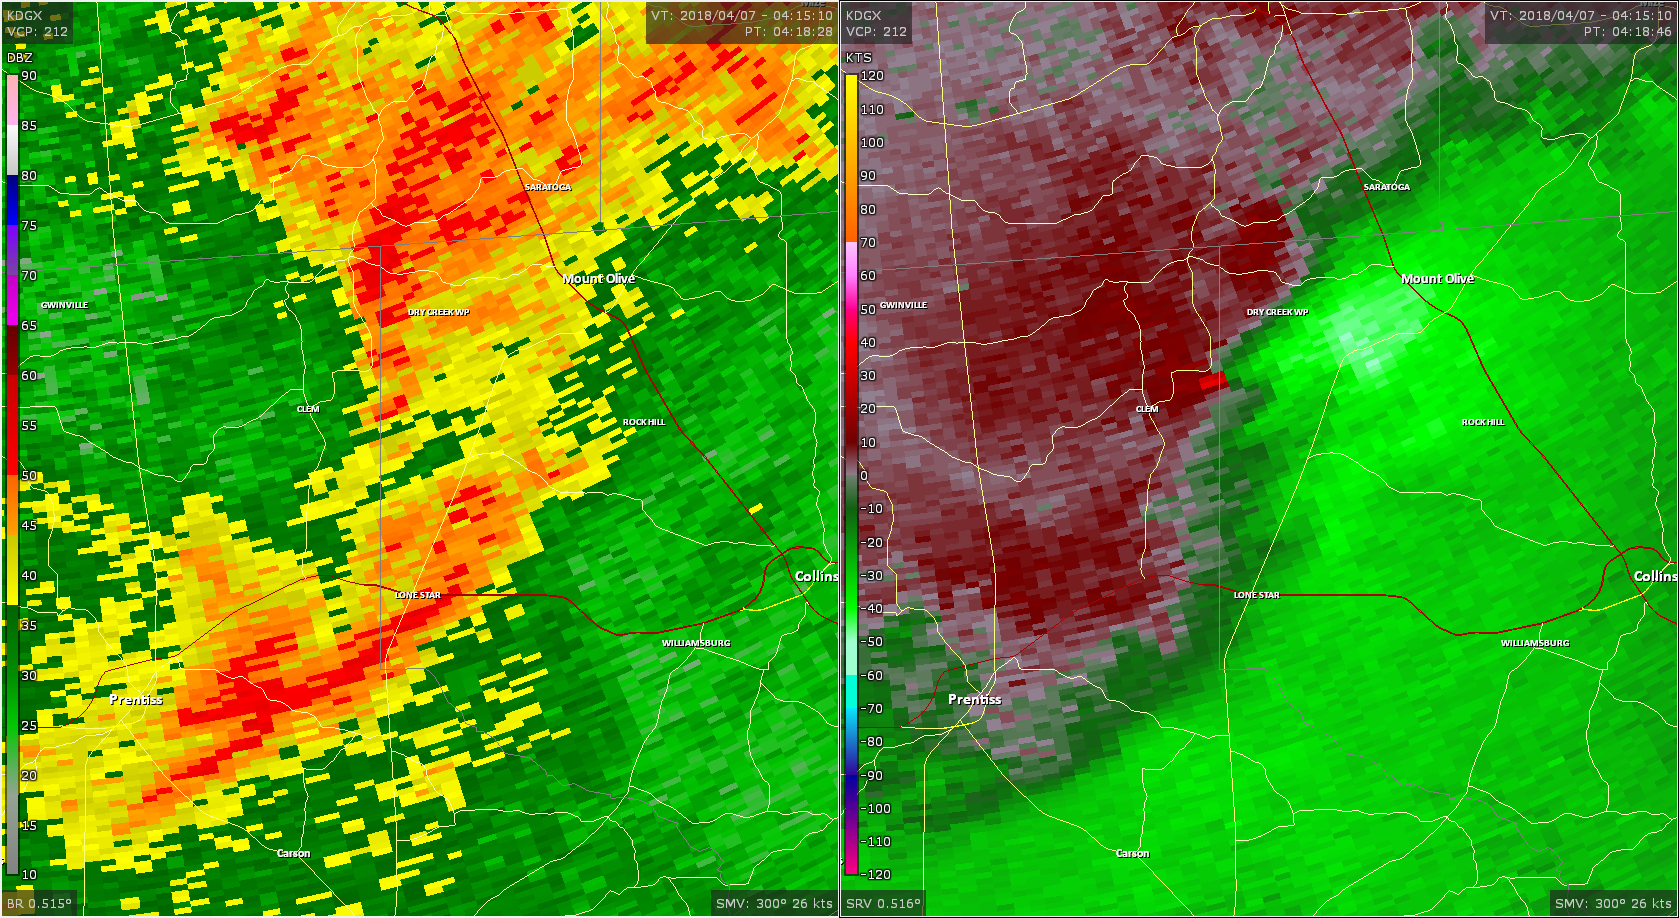 Radar - Jefferson Davis/Covington County Tornado